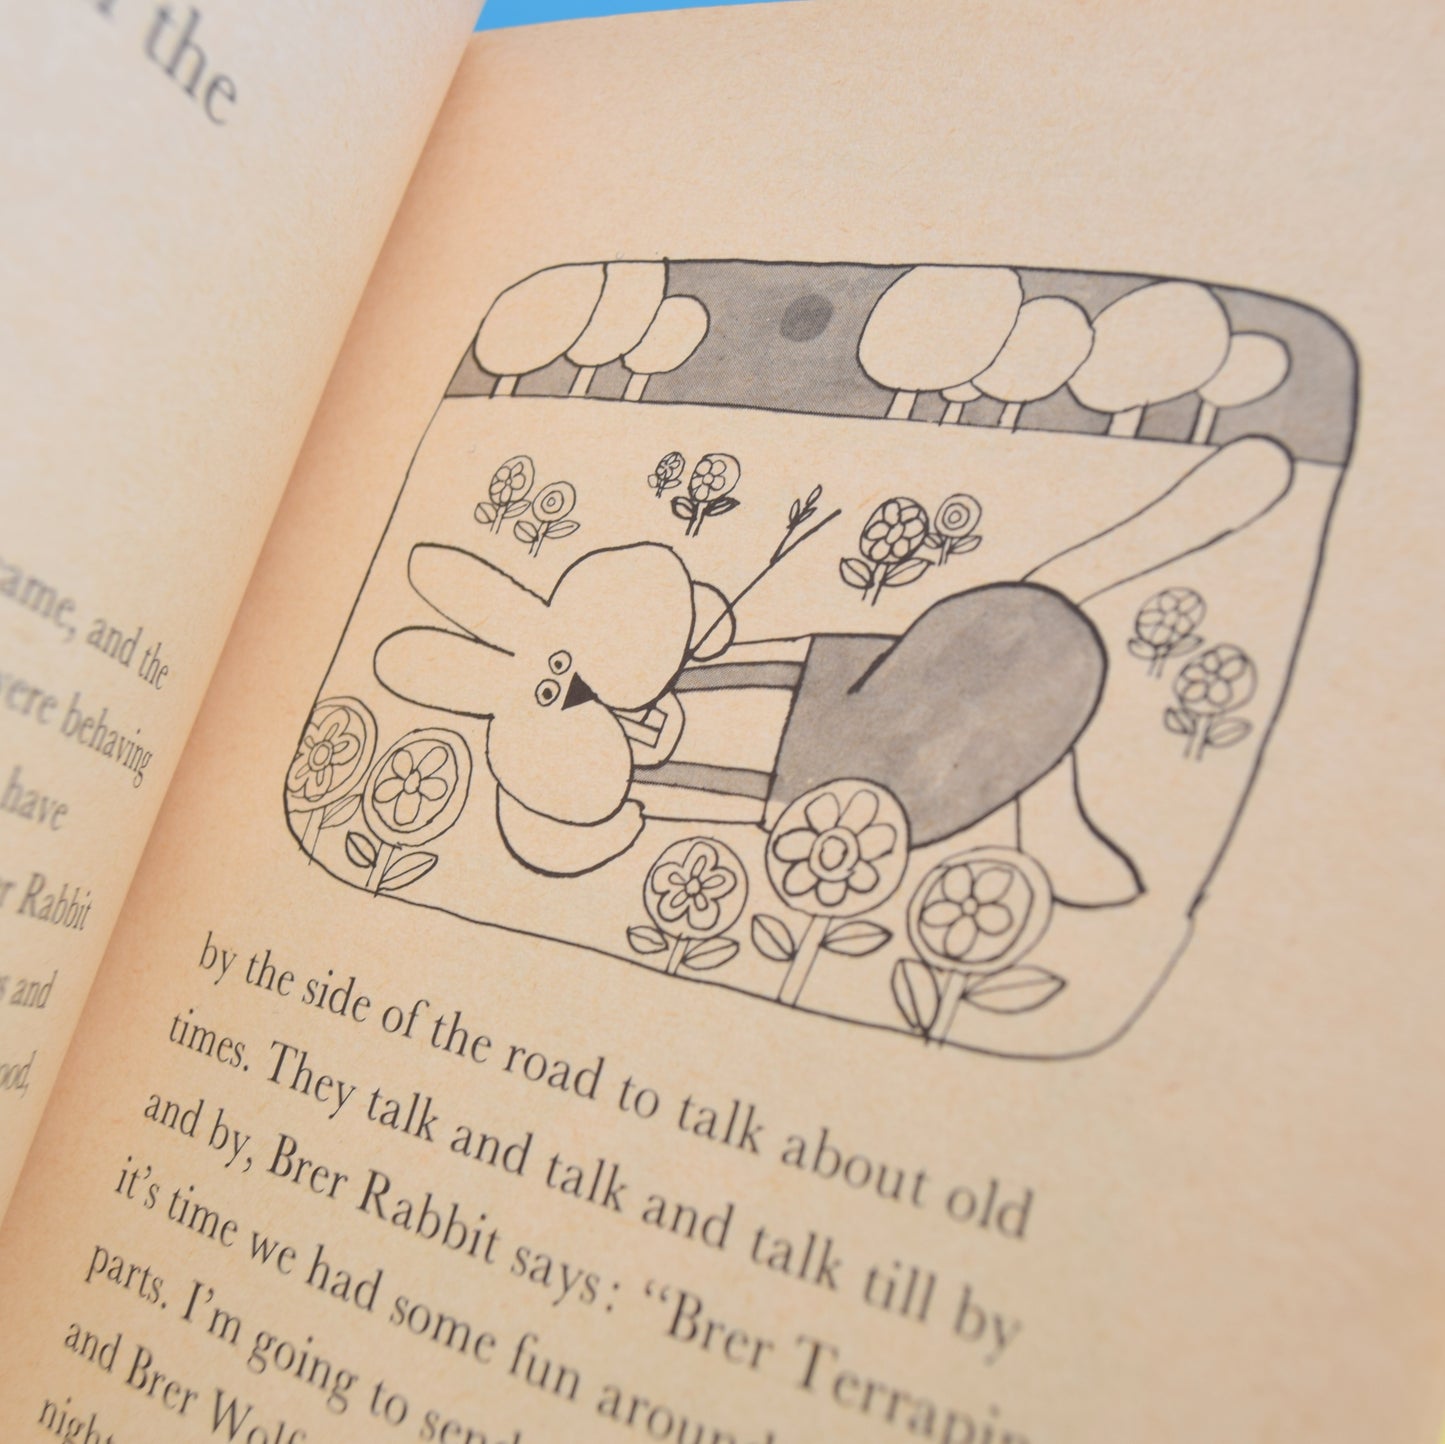 Vintage 1960s Book - Jackanory Brer Rabbit Stories - lovely Illustrations